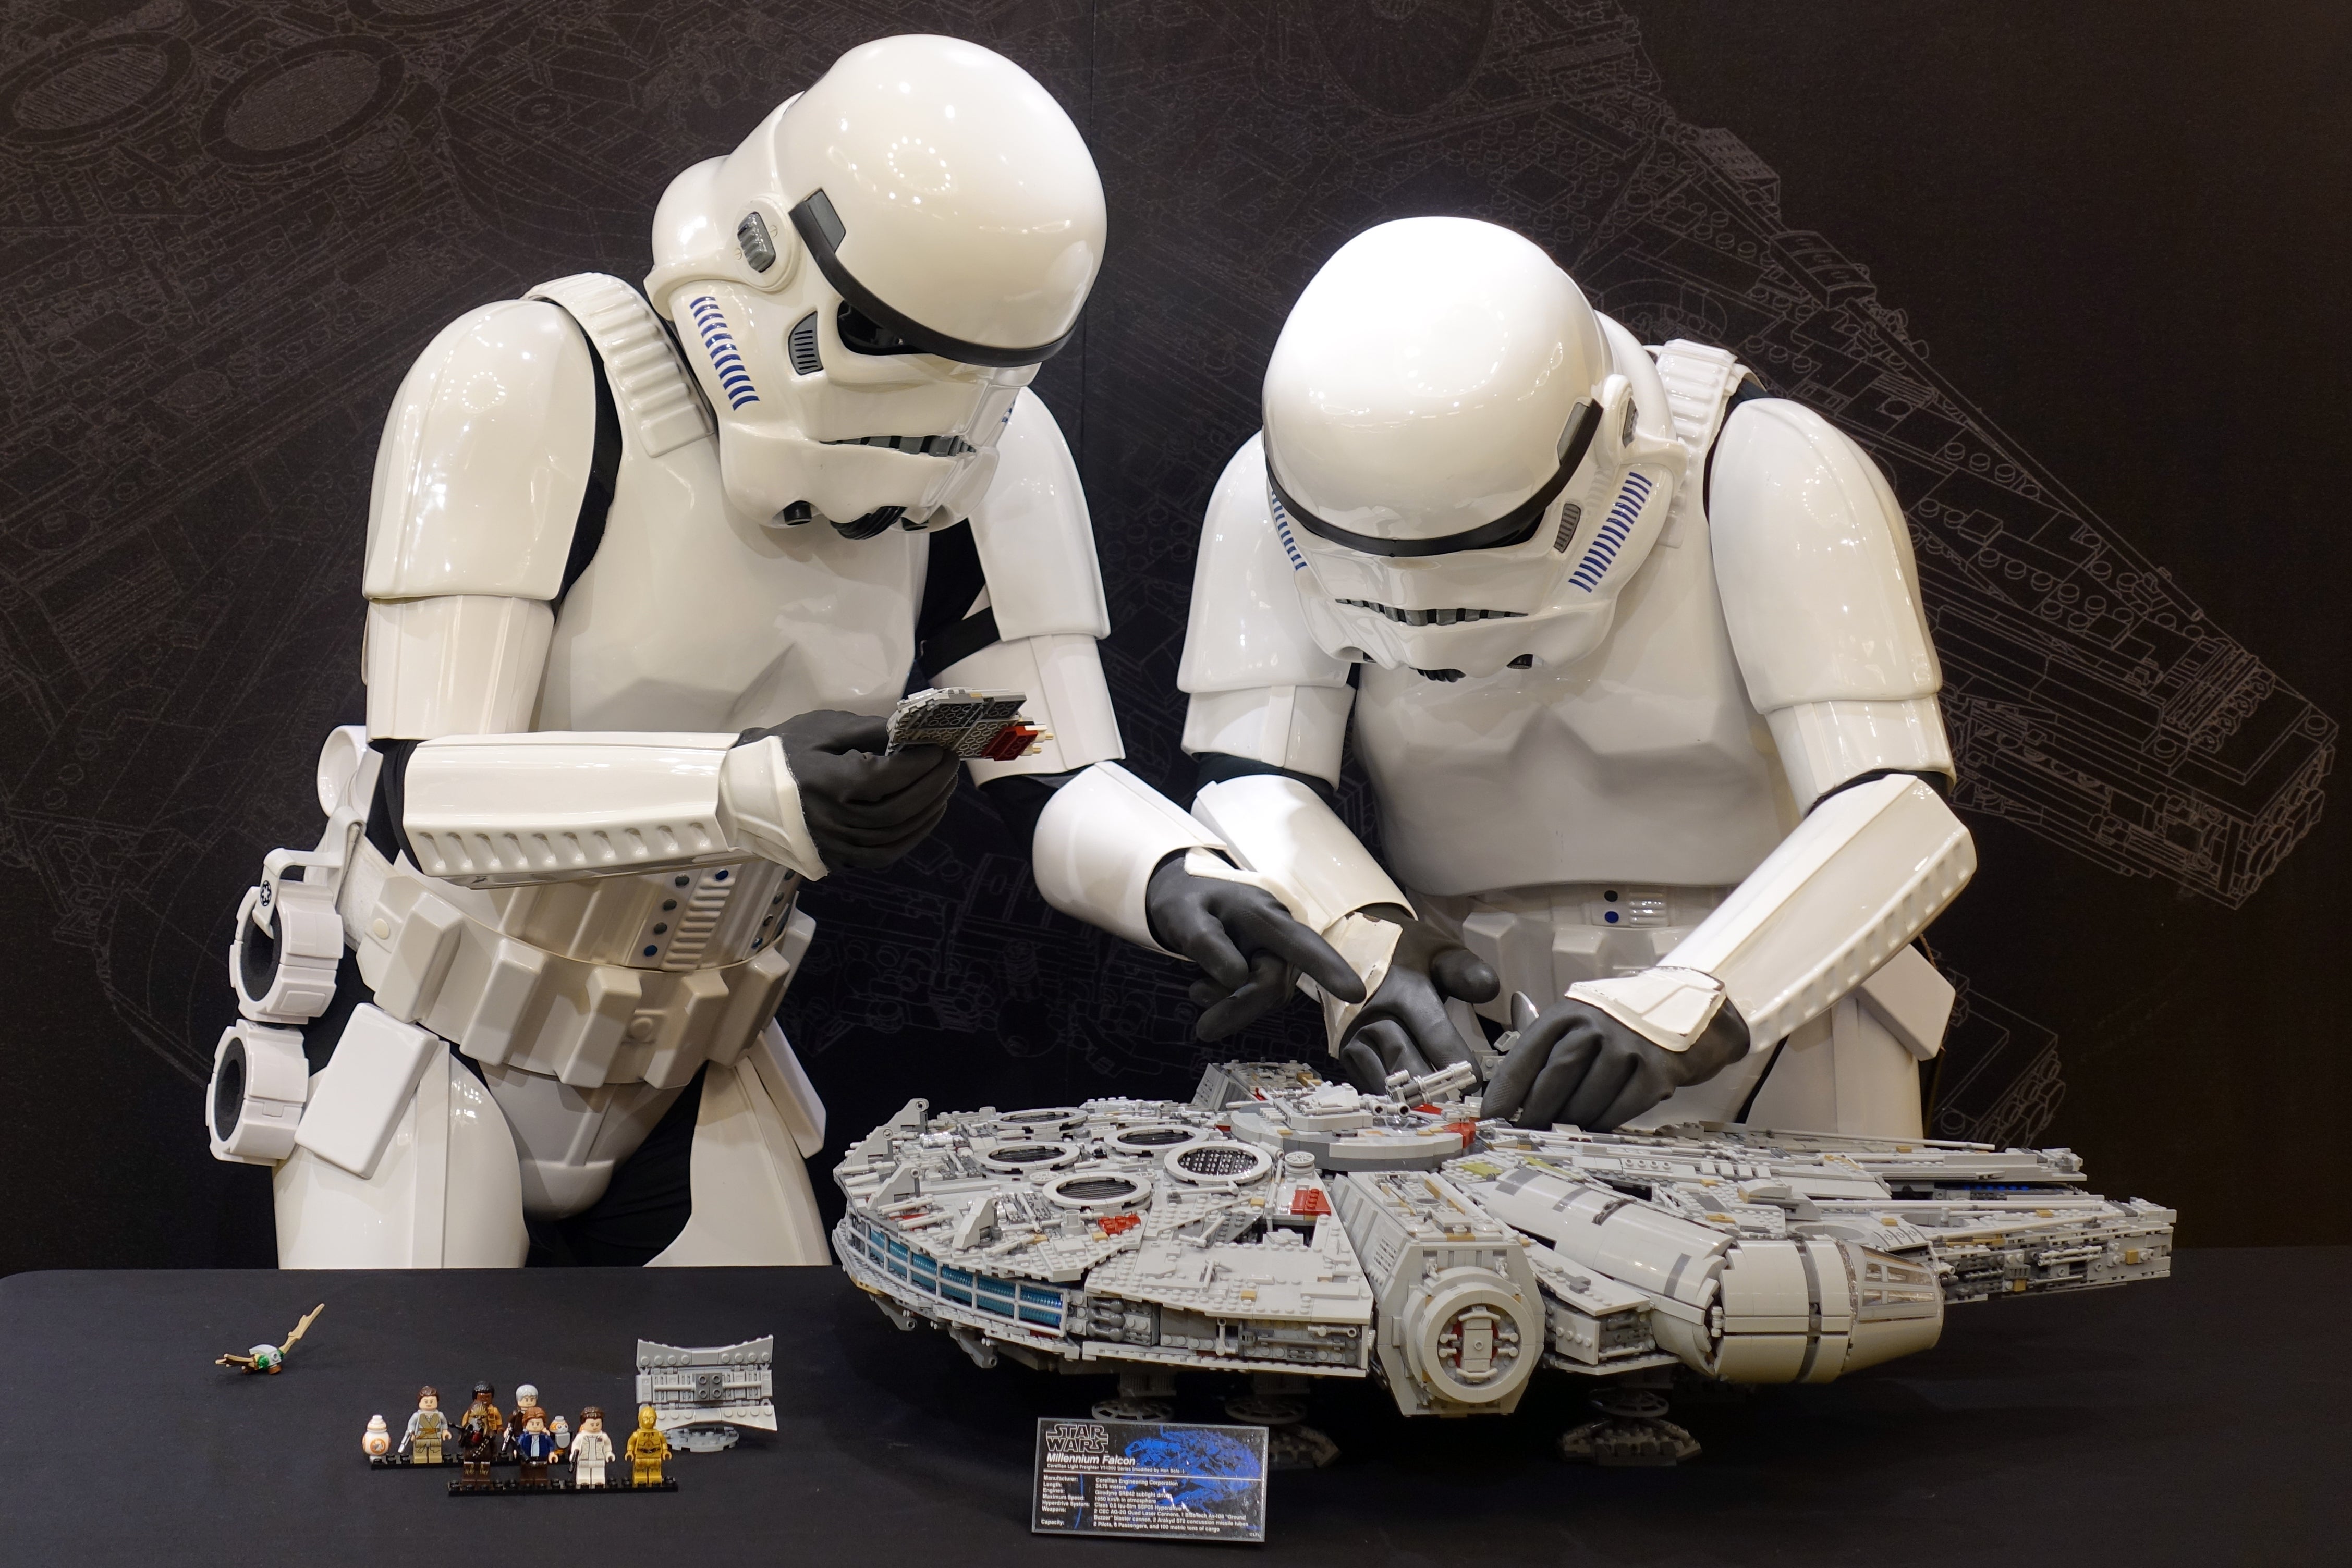 Stormtroopers assembling Lego Millennium Falcon model.